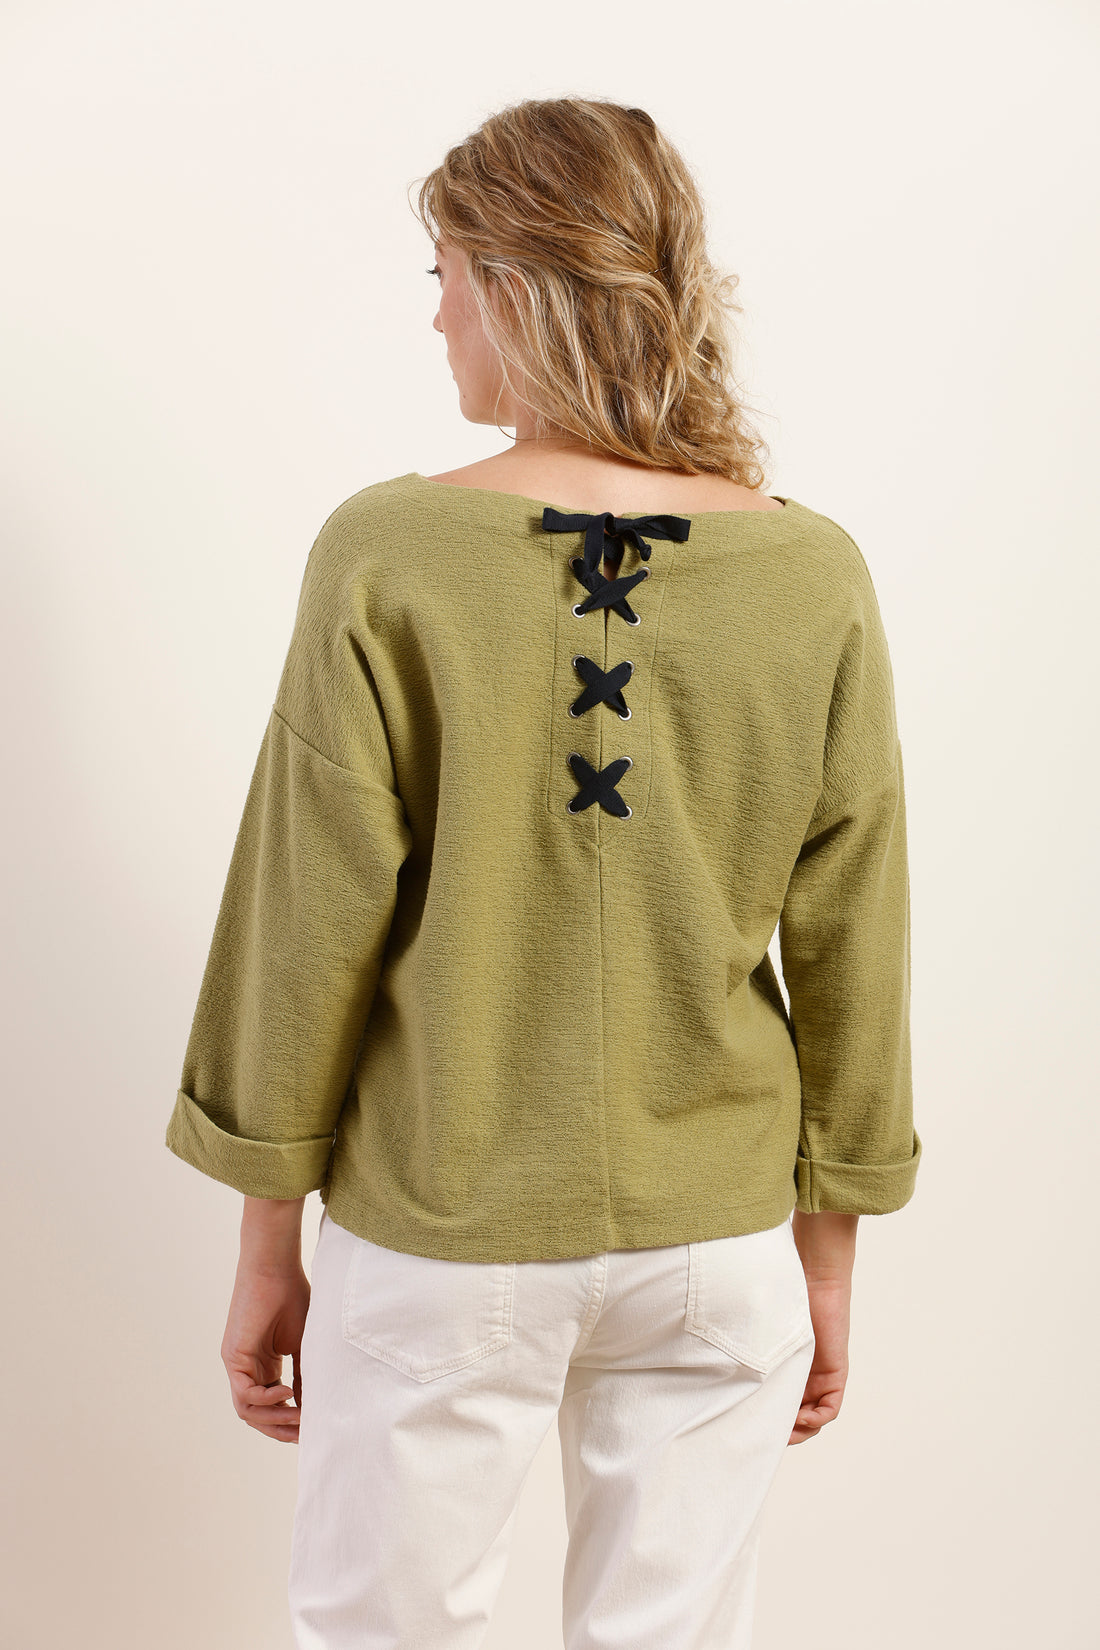 Mat De Misaine Organic Cotton Embroidered Sweatshirt -25% at Checkout